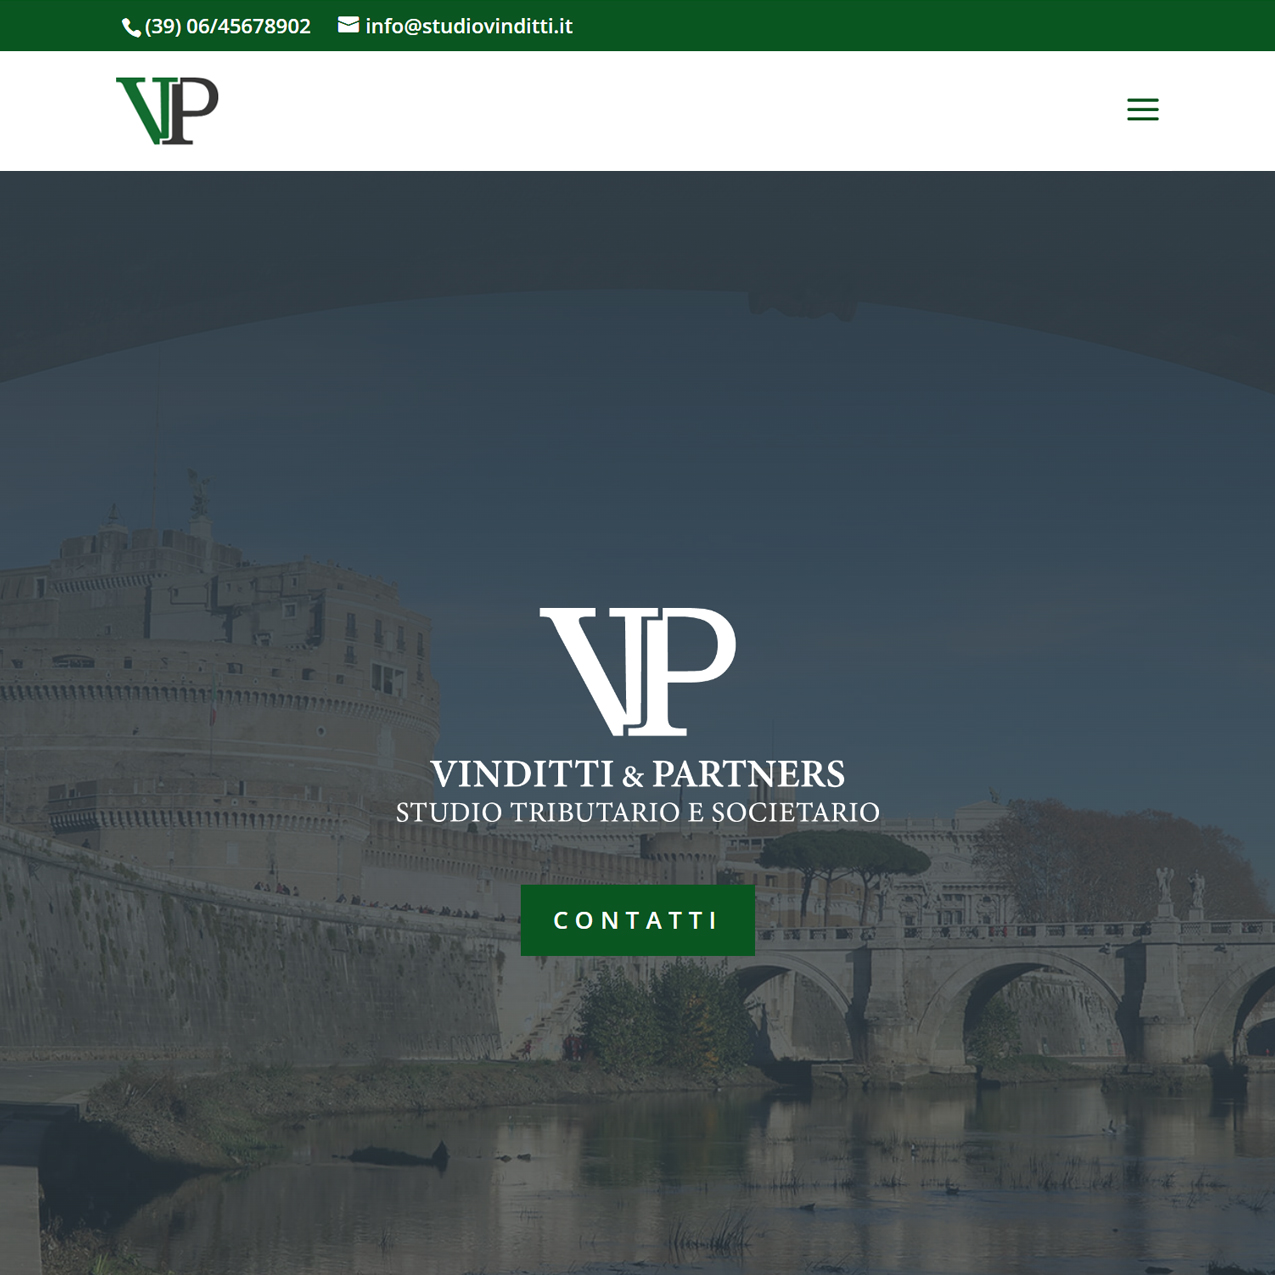 Vinditti & Partners